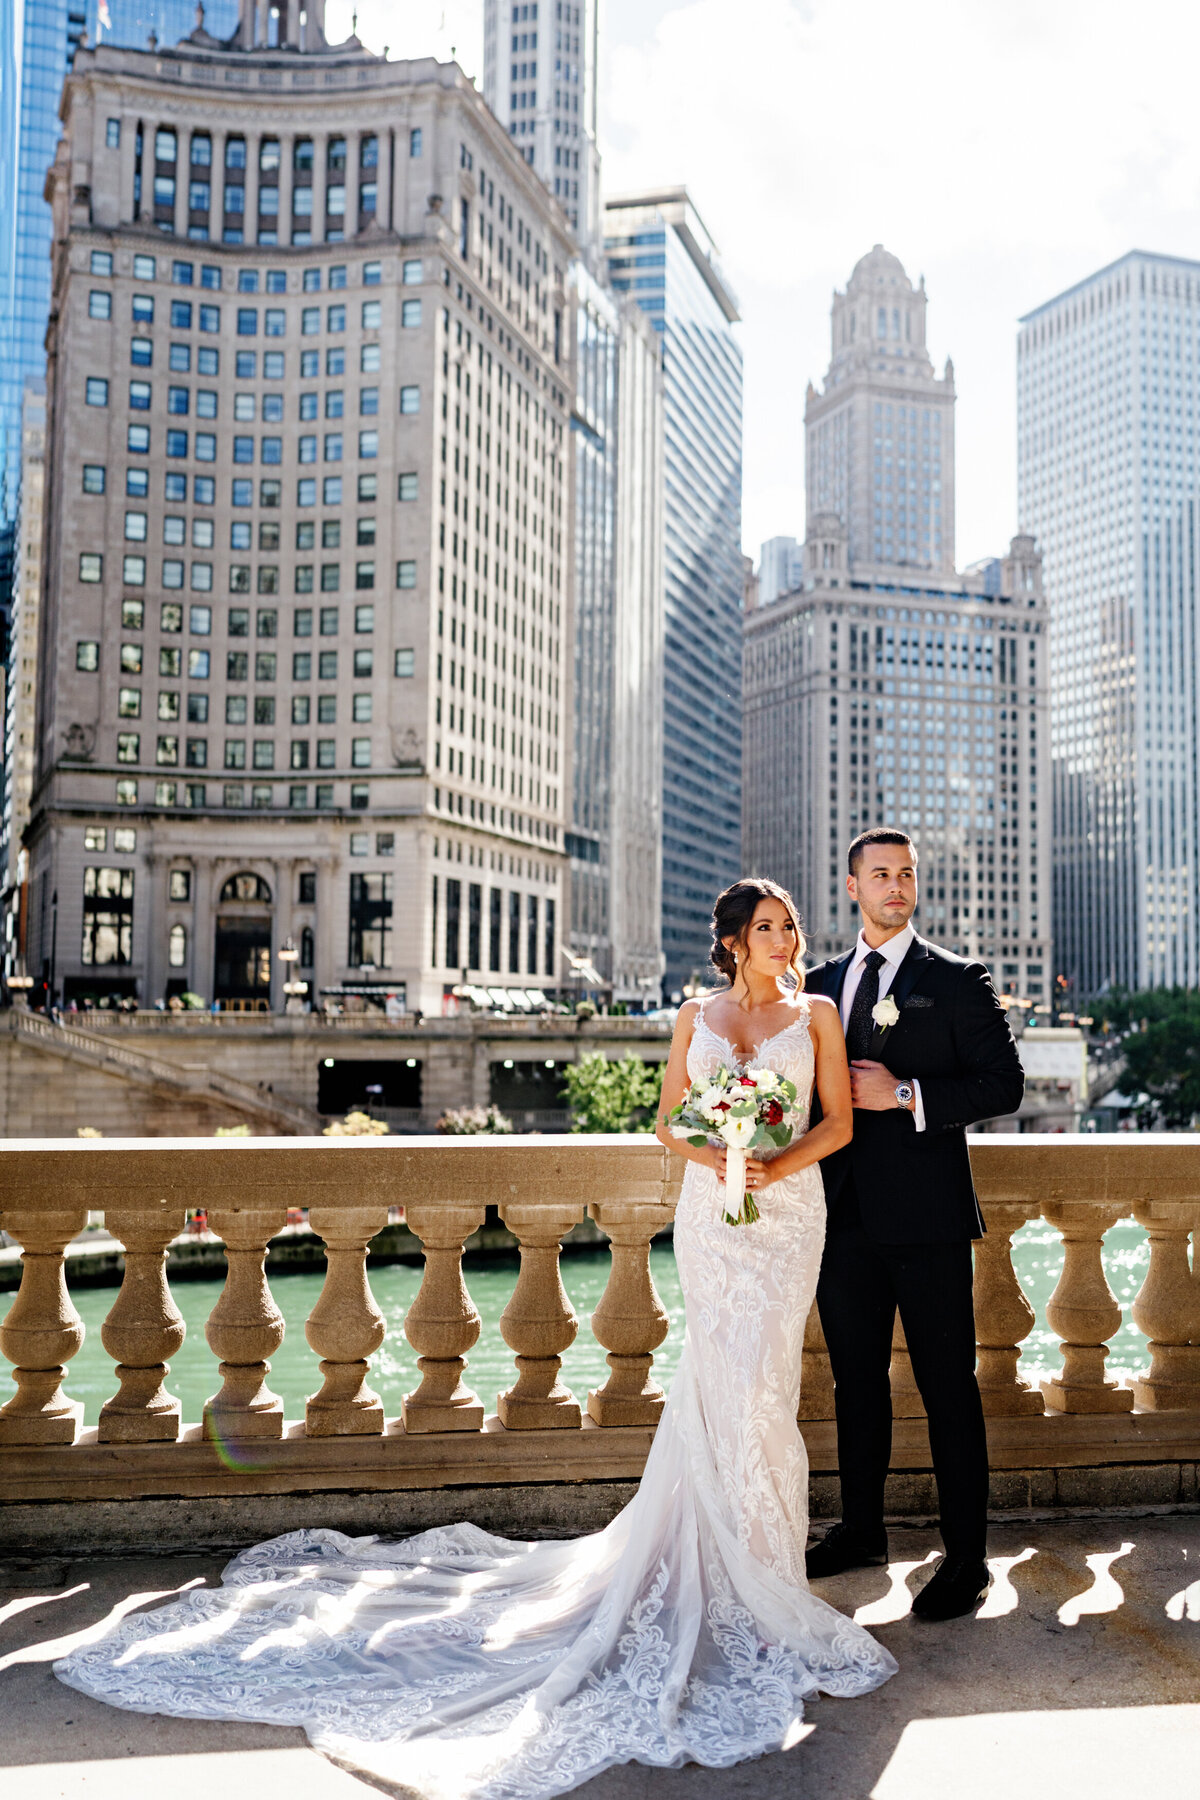 Aspen-Avenue-Chicago-Wedding-Photographer-Fairlie-simply-elegant-xo-anna-held-floral-studio-tamara-makeup-rustic-modern-hocky-fun-hype-elegant-Chicago-Loft-industrial-Romantic-XO-Art-And-Design-FAV-77